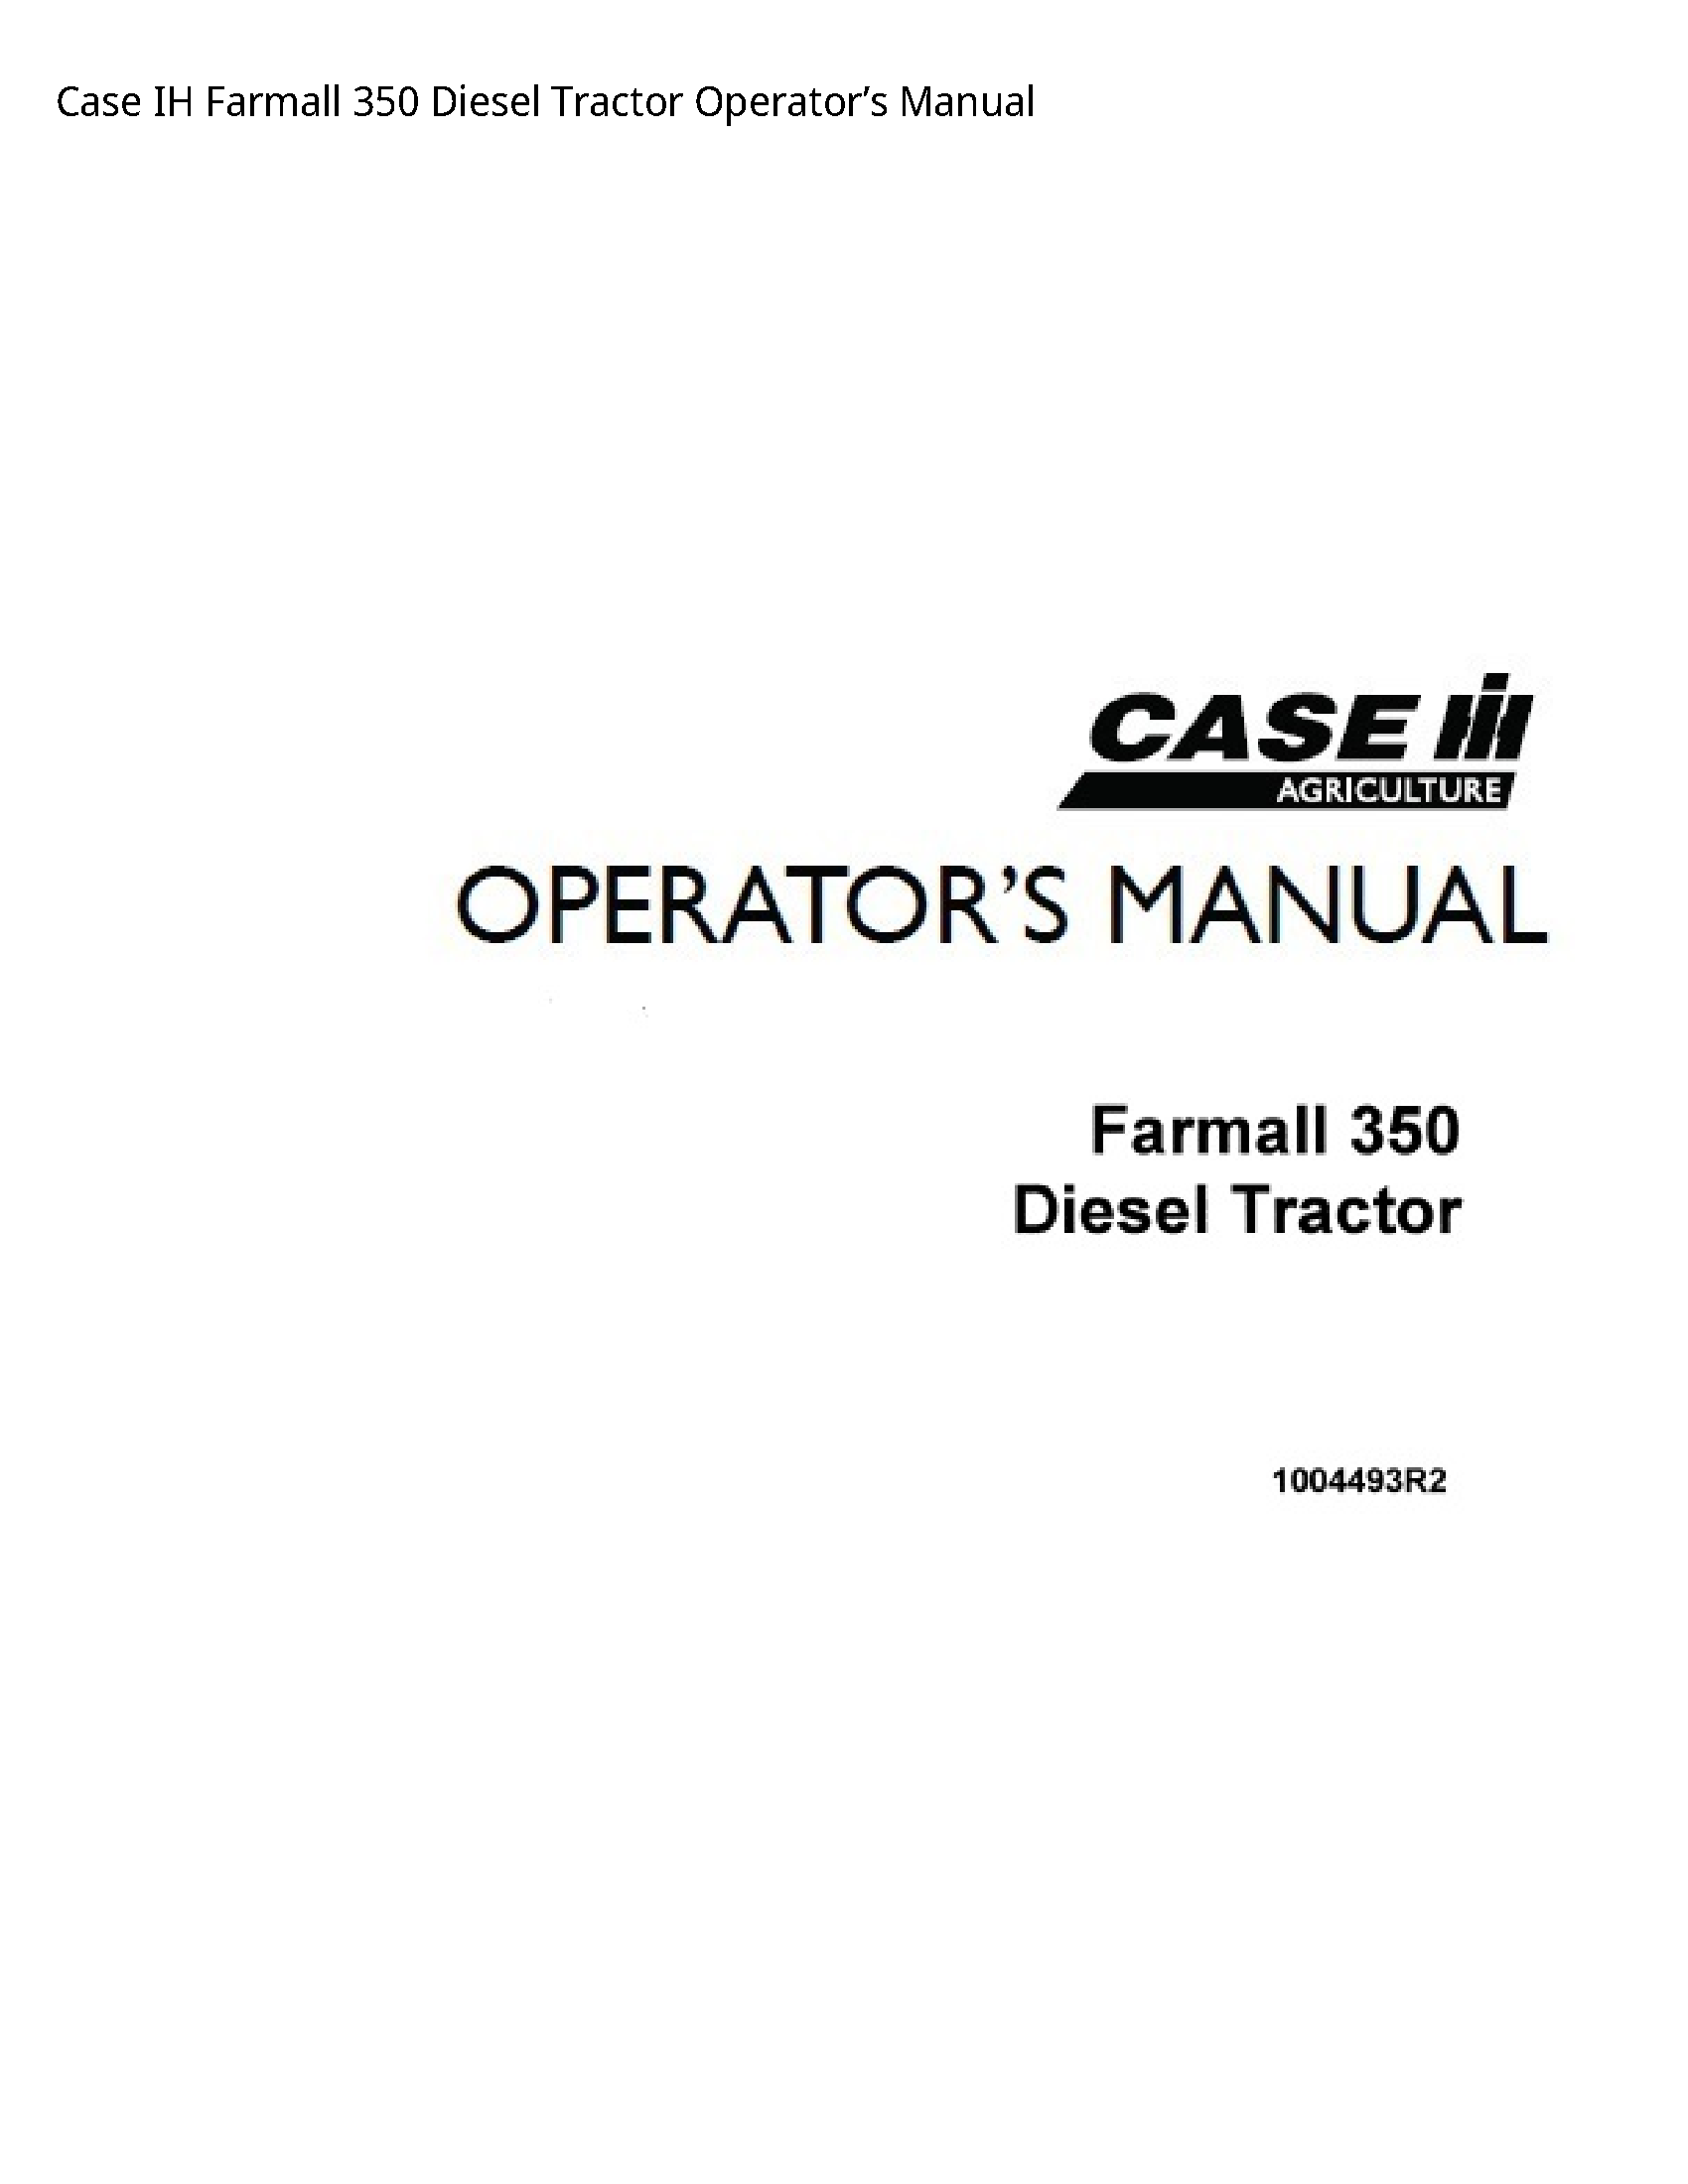 Case/Case IH 350 IH Farmall Diesel Tractor Operator’s manual